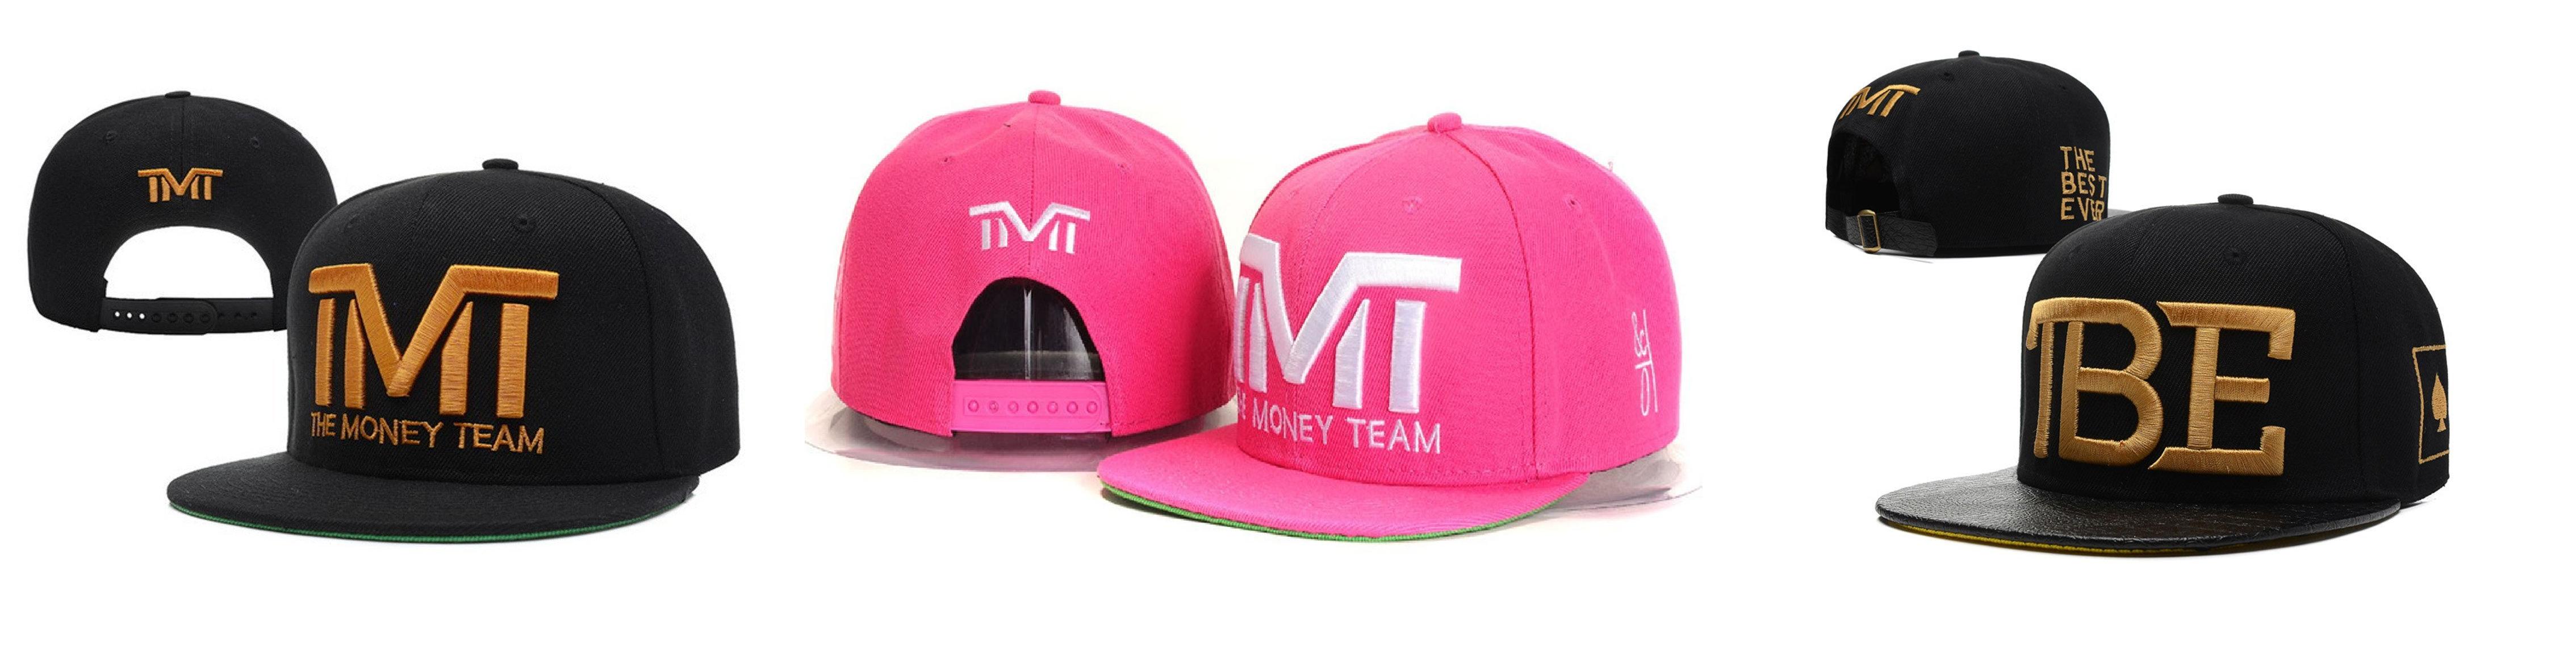 TBE hat, TBE cap, TMT hat, TMT cap, Mayweather baseball hat